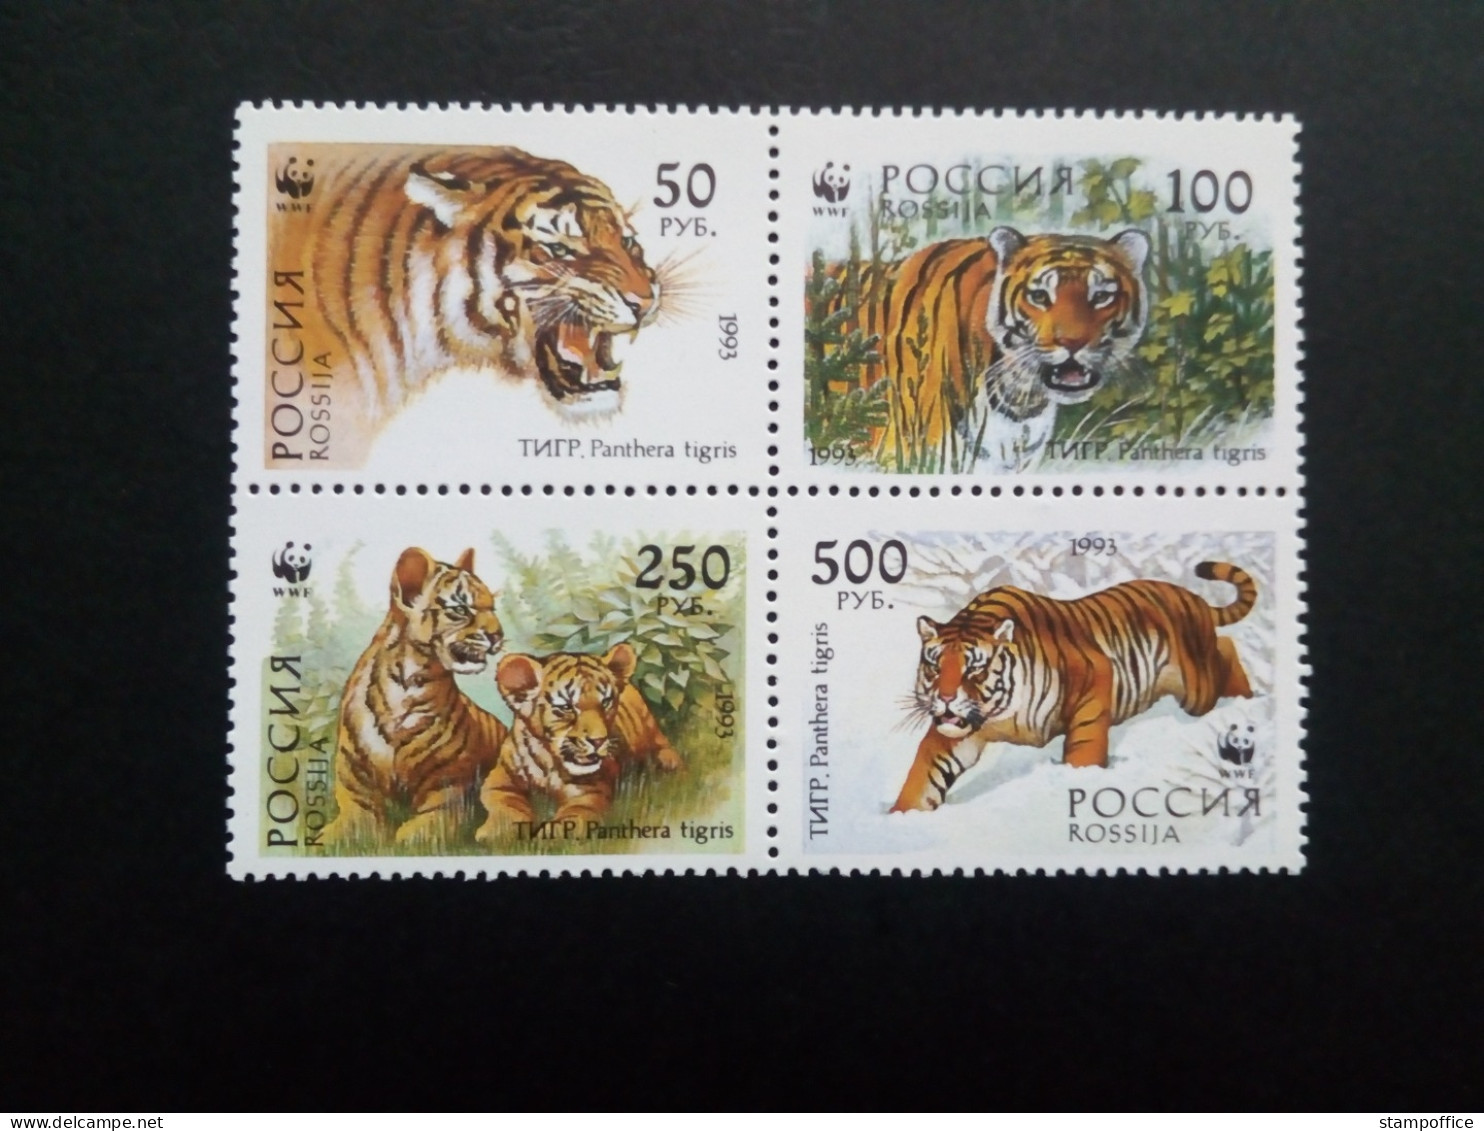 RUSSLAND MI-NR. 343-346 POSTFRISCH(MINT) SIBIRISCHER TIGER WWF 1993 - Félins